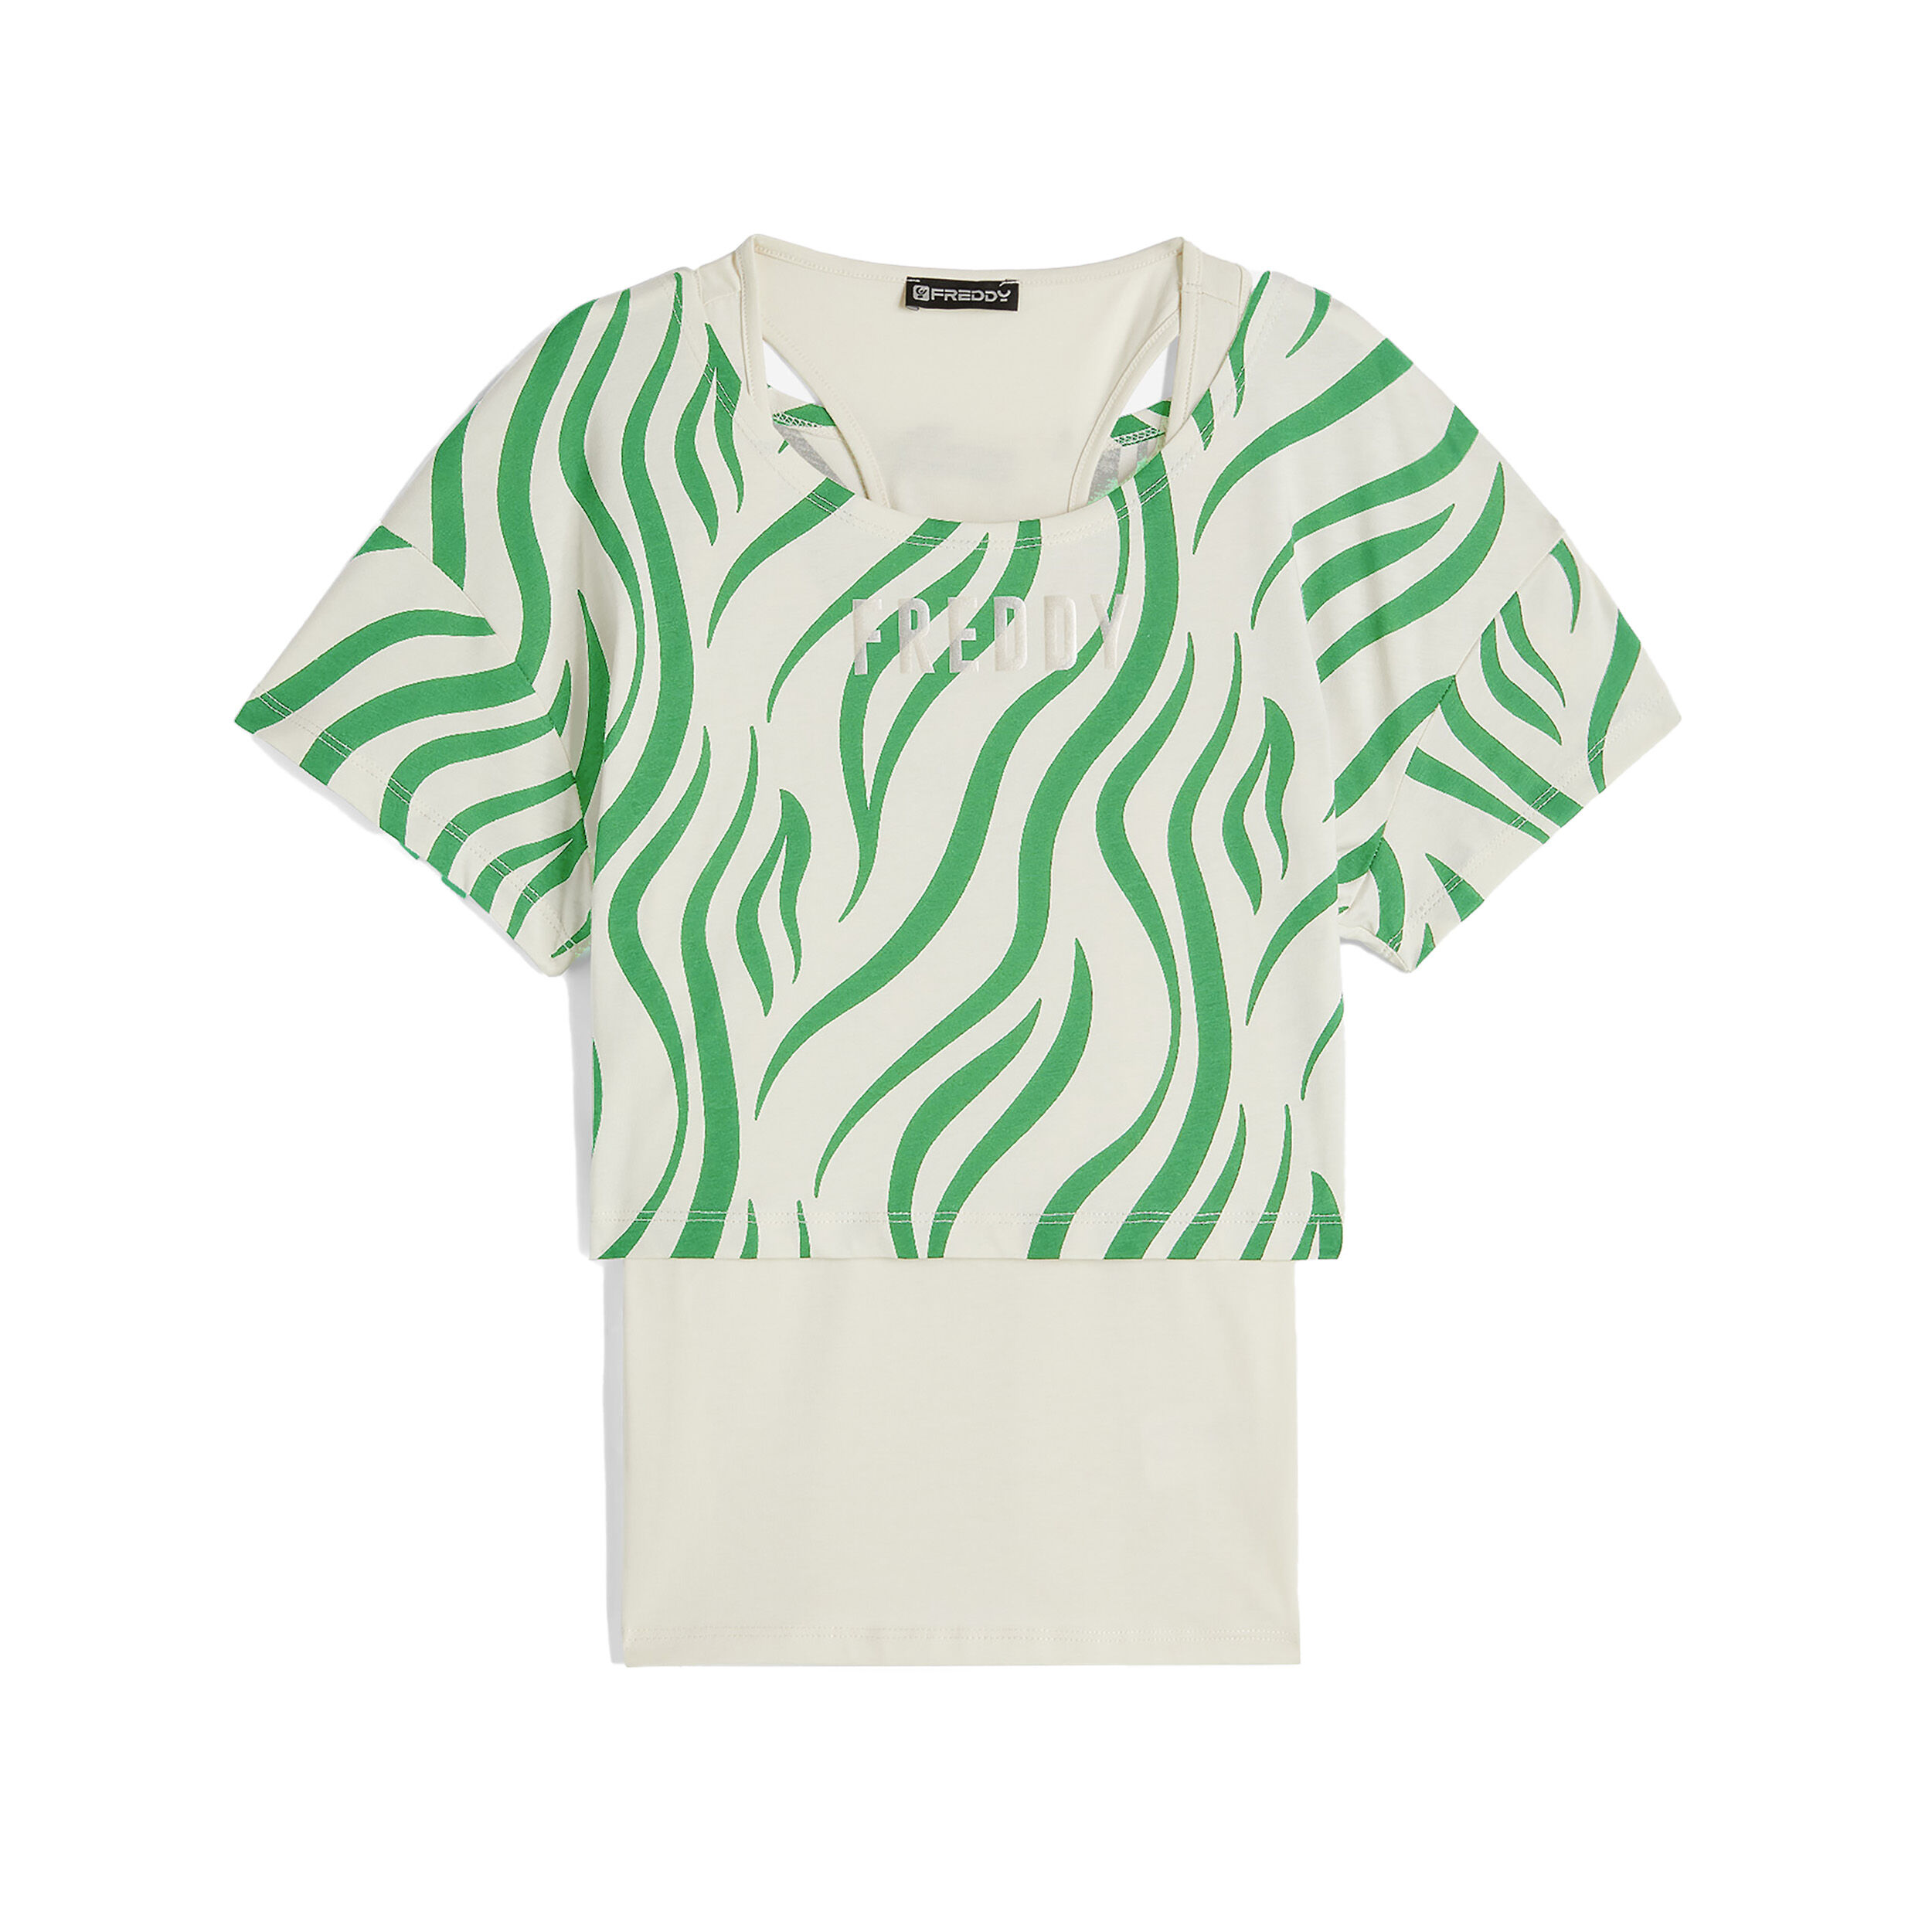 Freddy Set canotta+t-shirt cropped da donna con stampa zebrata Beige-Zebra Green On Beige Donna Medium